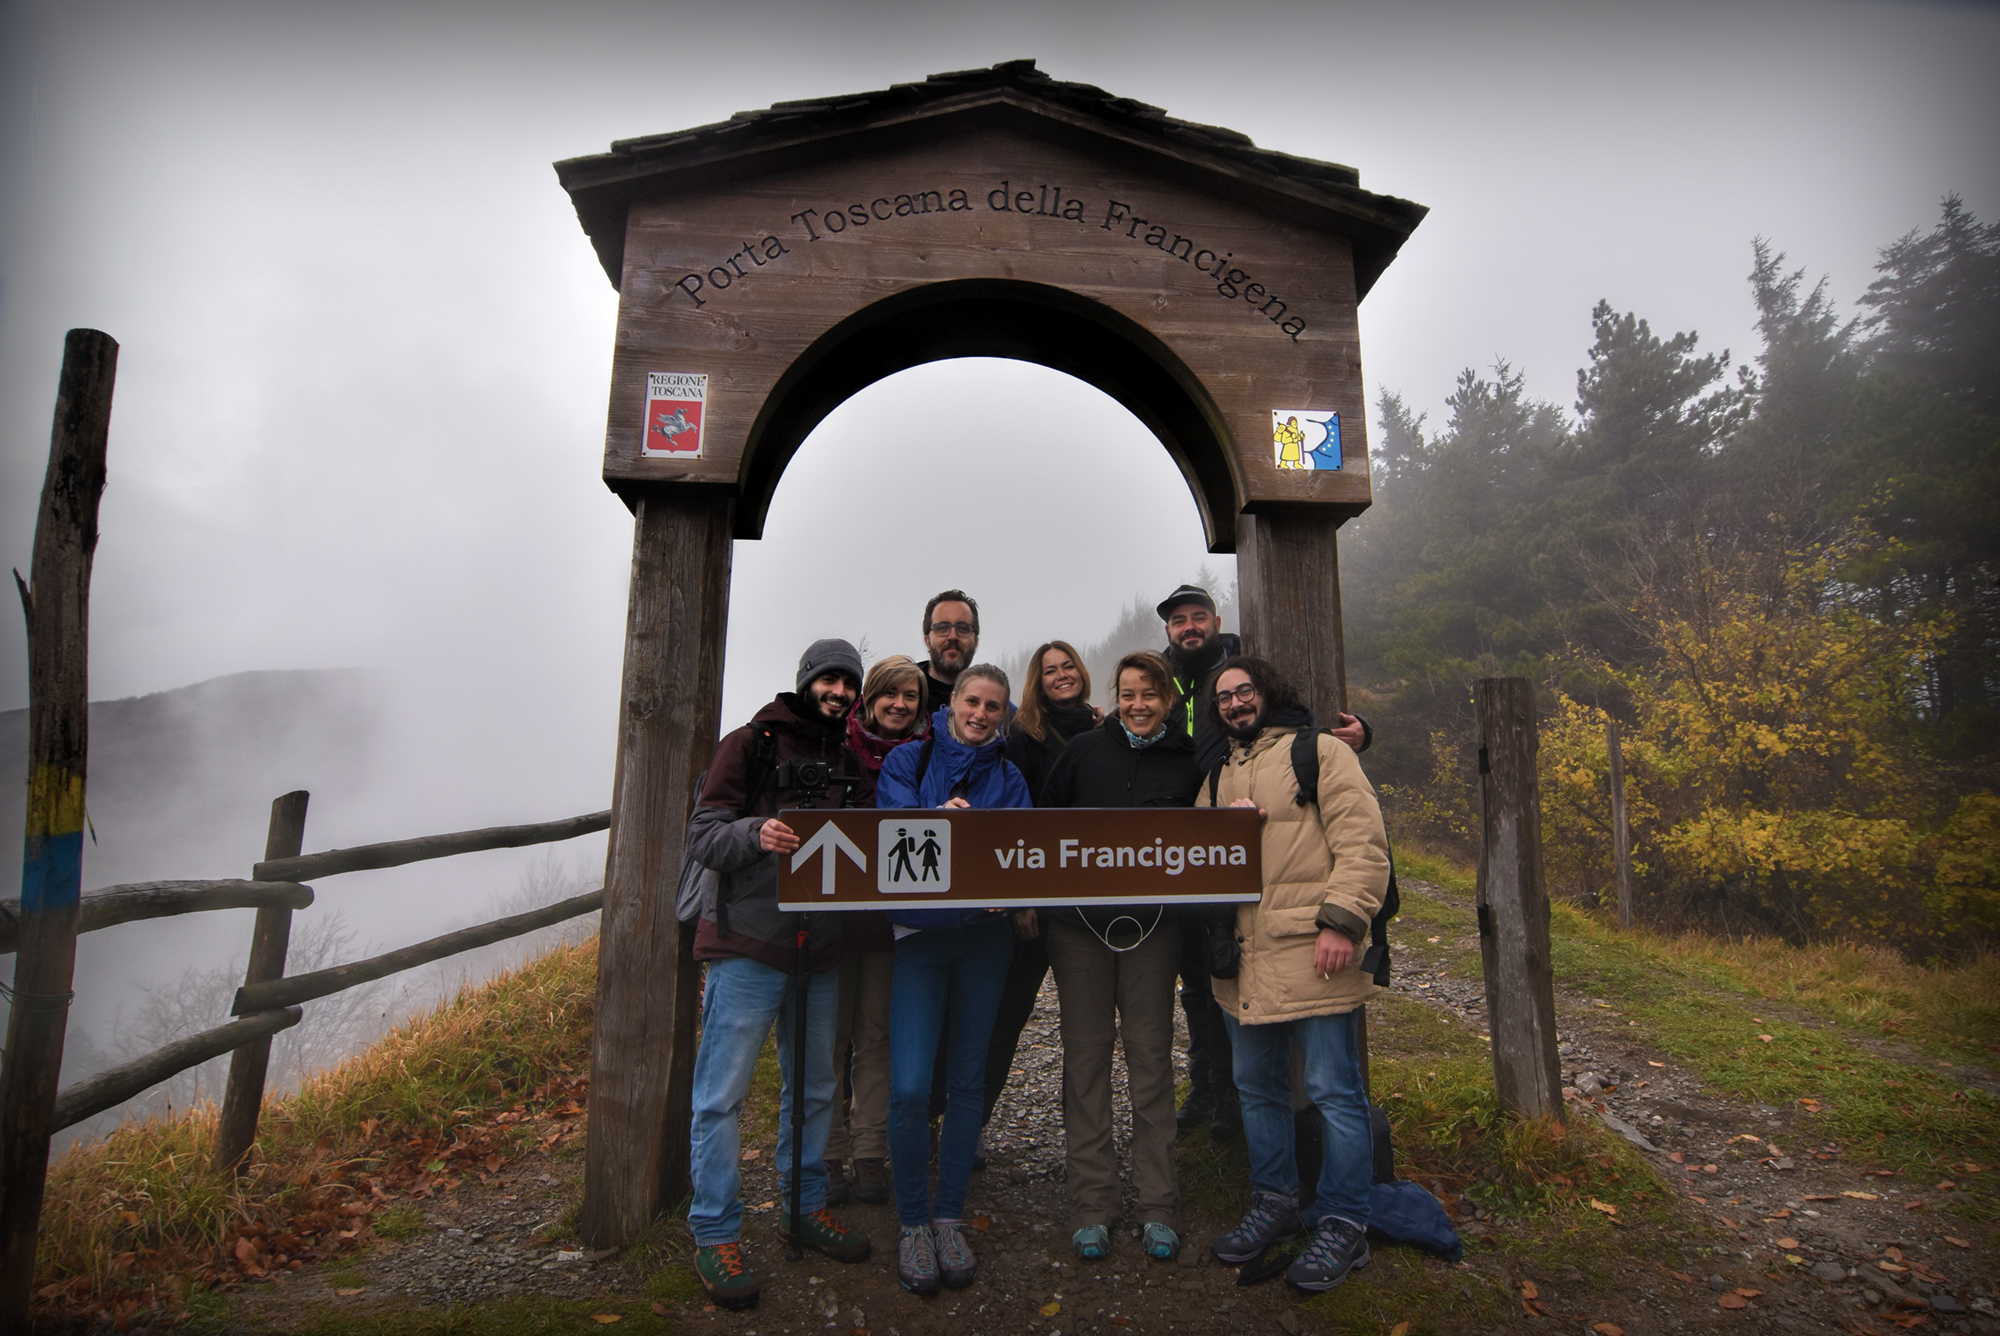 Group photo before the Francigena door to Tuscany